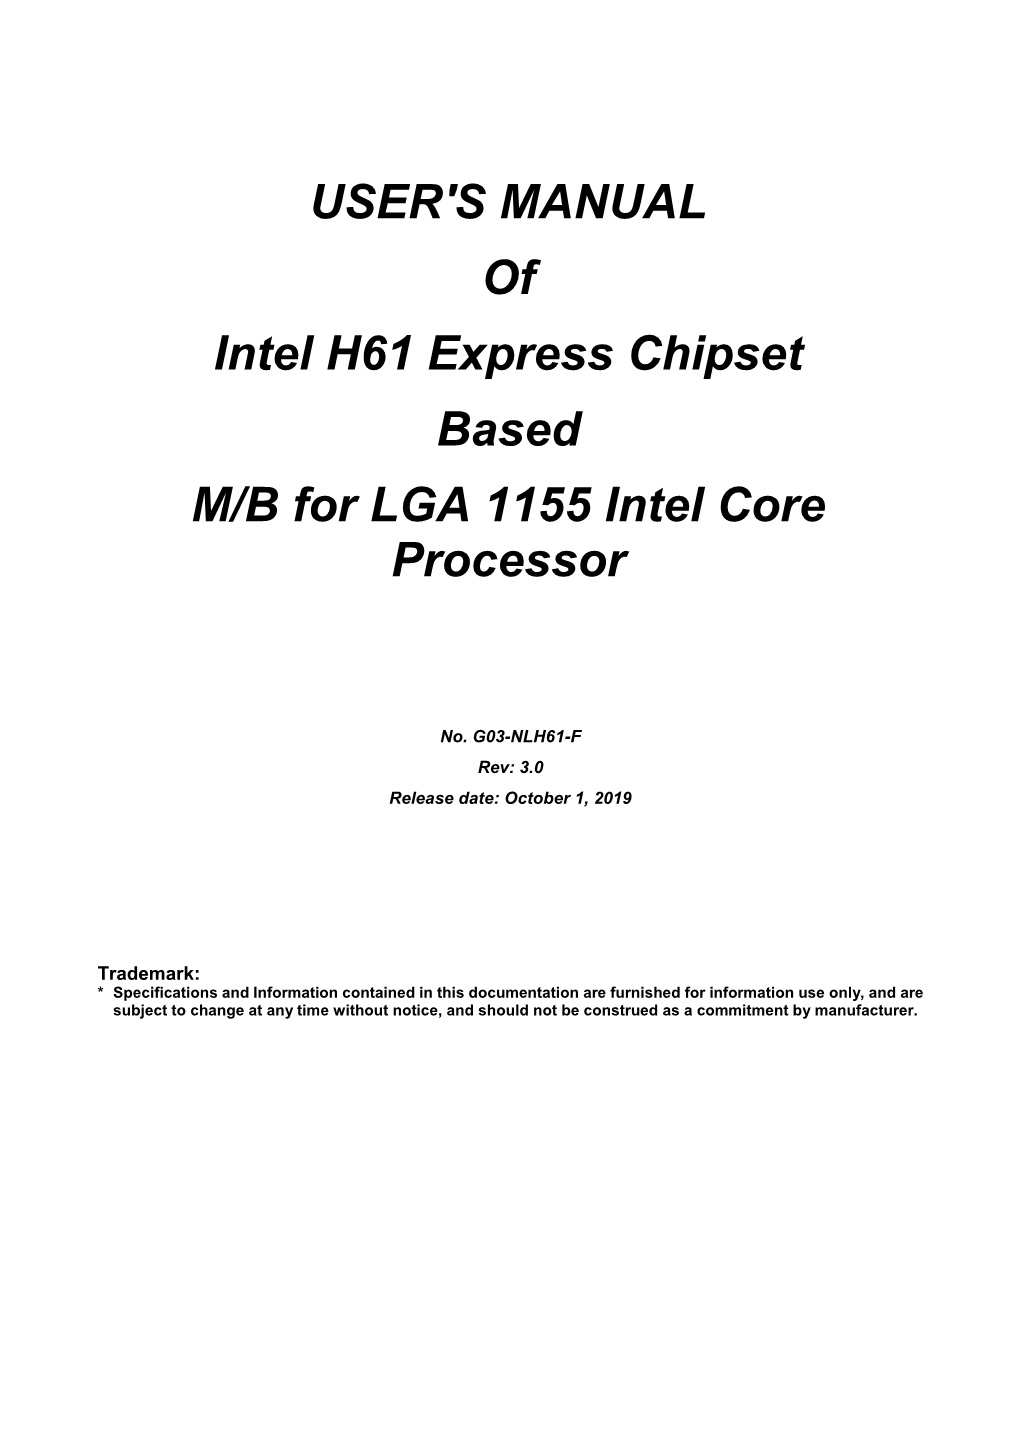 USER's MANUAL of Intel H61 Express Chipset Based M/B for LGA 1155 Intel Core Processor